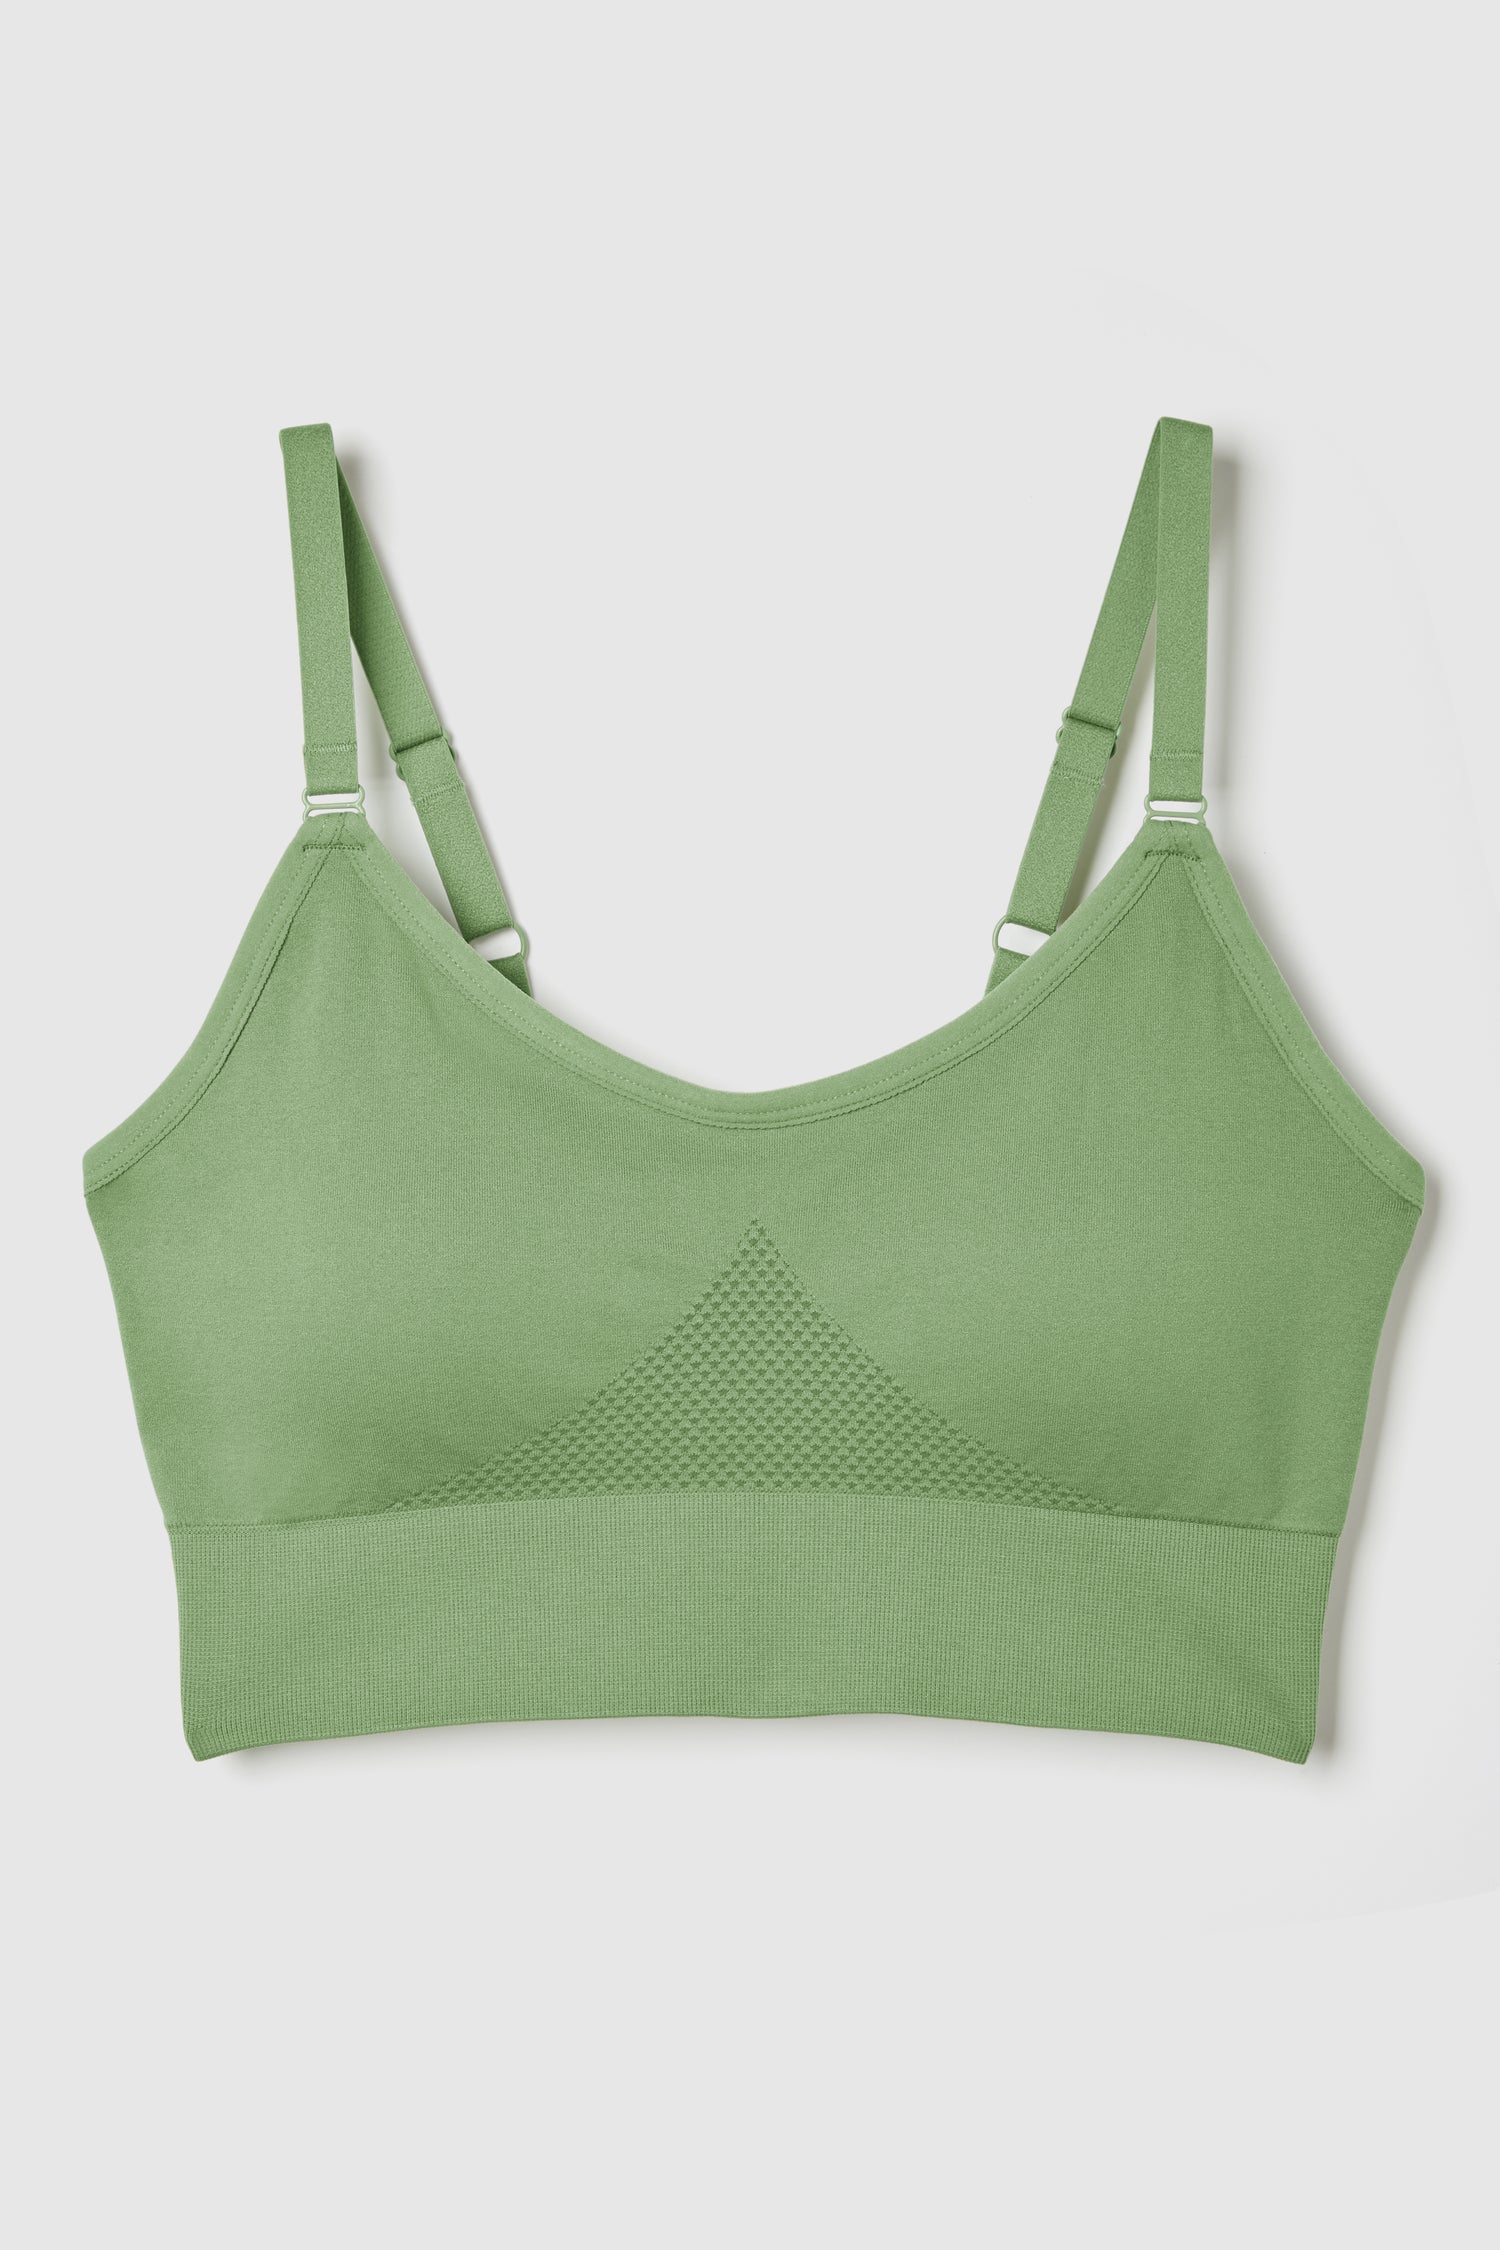 Cordaw Womens Green Front Zip Athletic Bra Size 2XL - beyond exchange